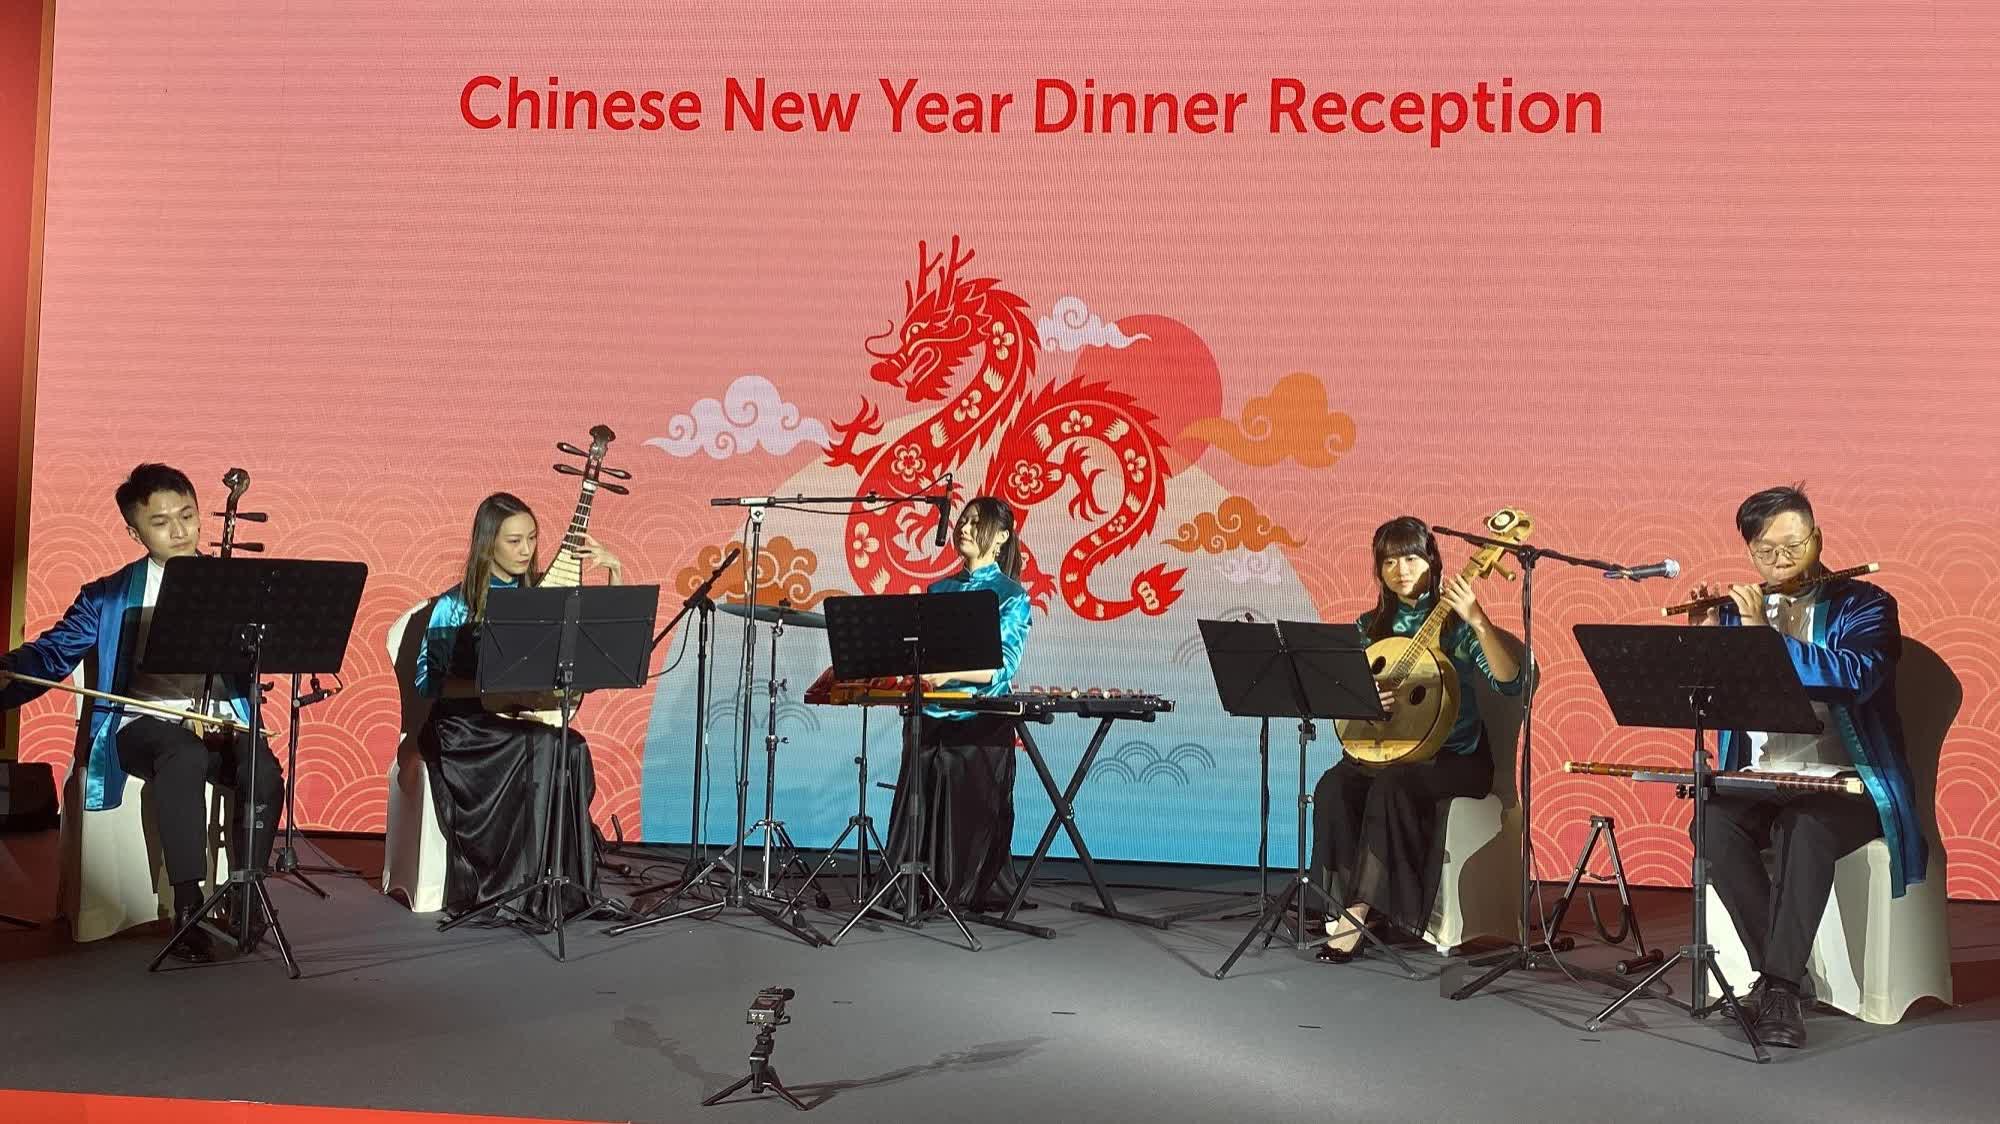 Dubai ETO hosts spectacular dinner reception to celebrate Chinese New Year